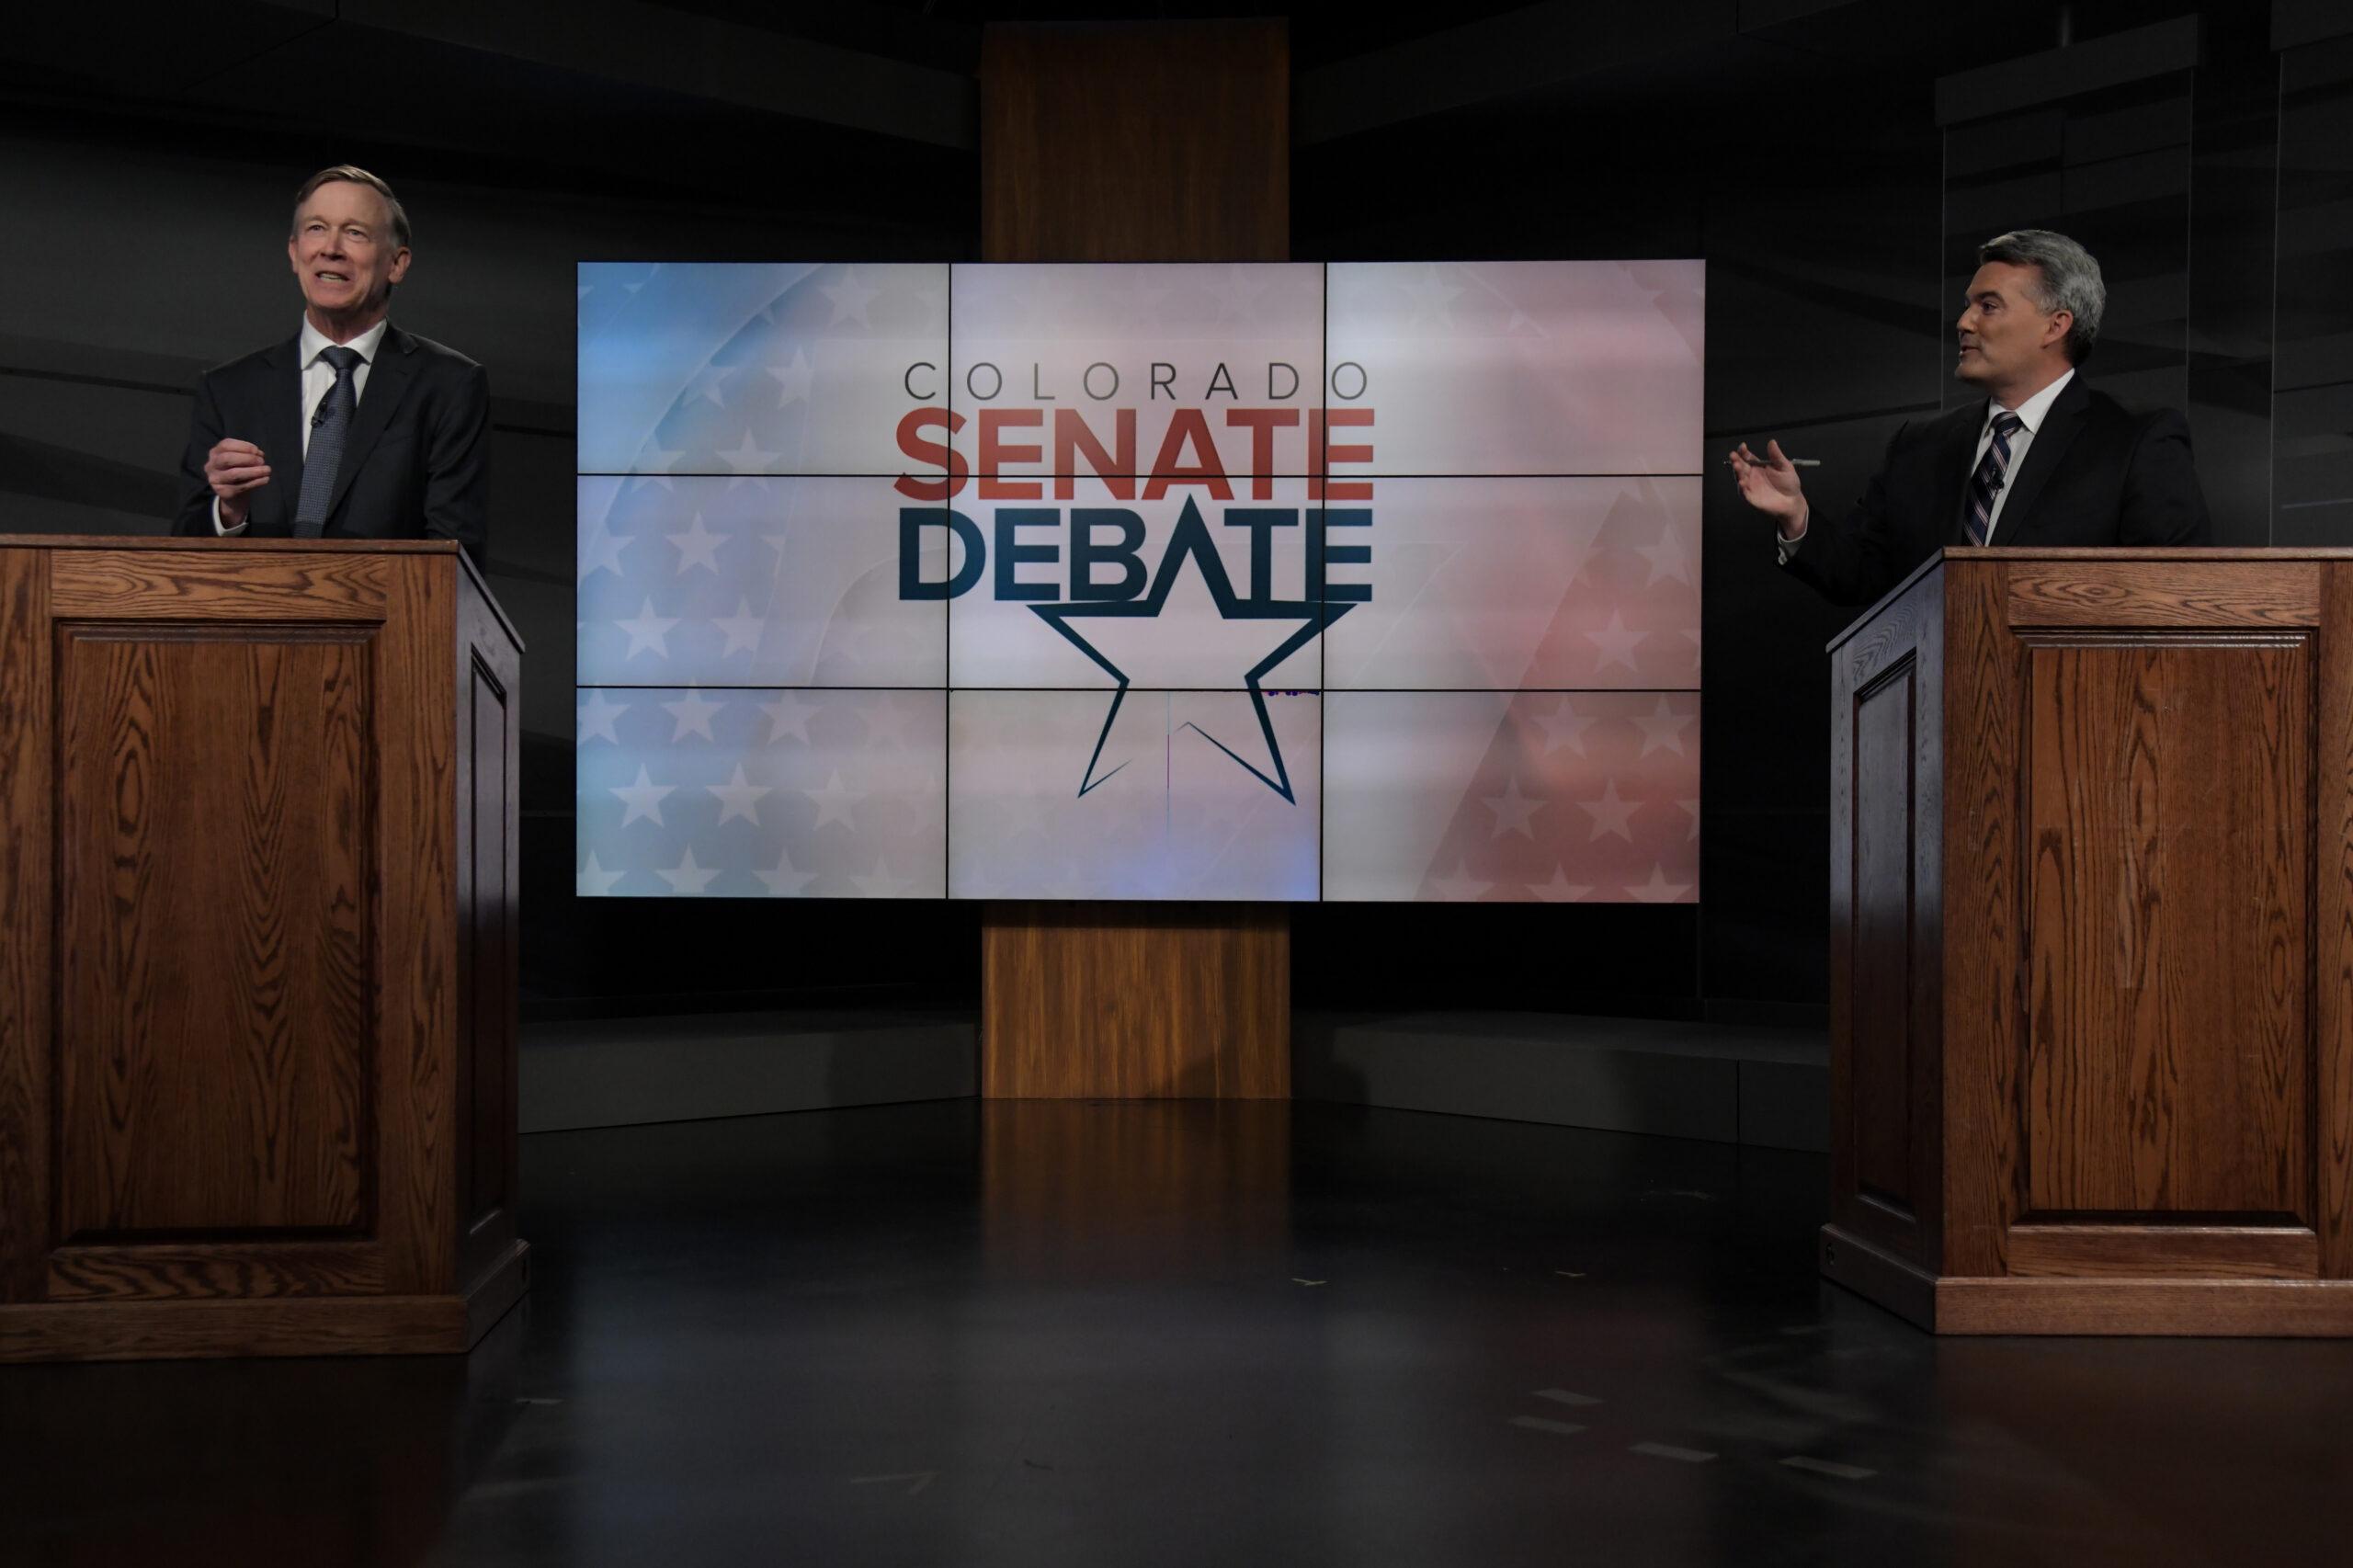 Colorado Senate debate